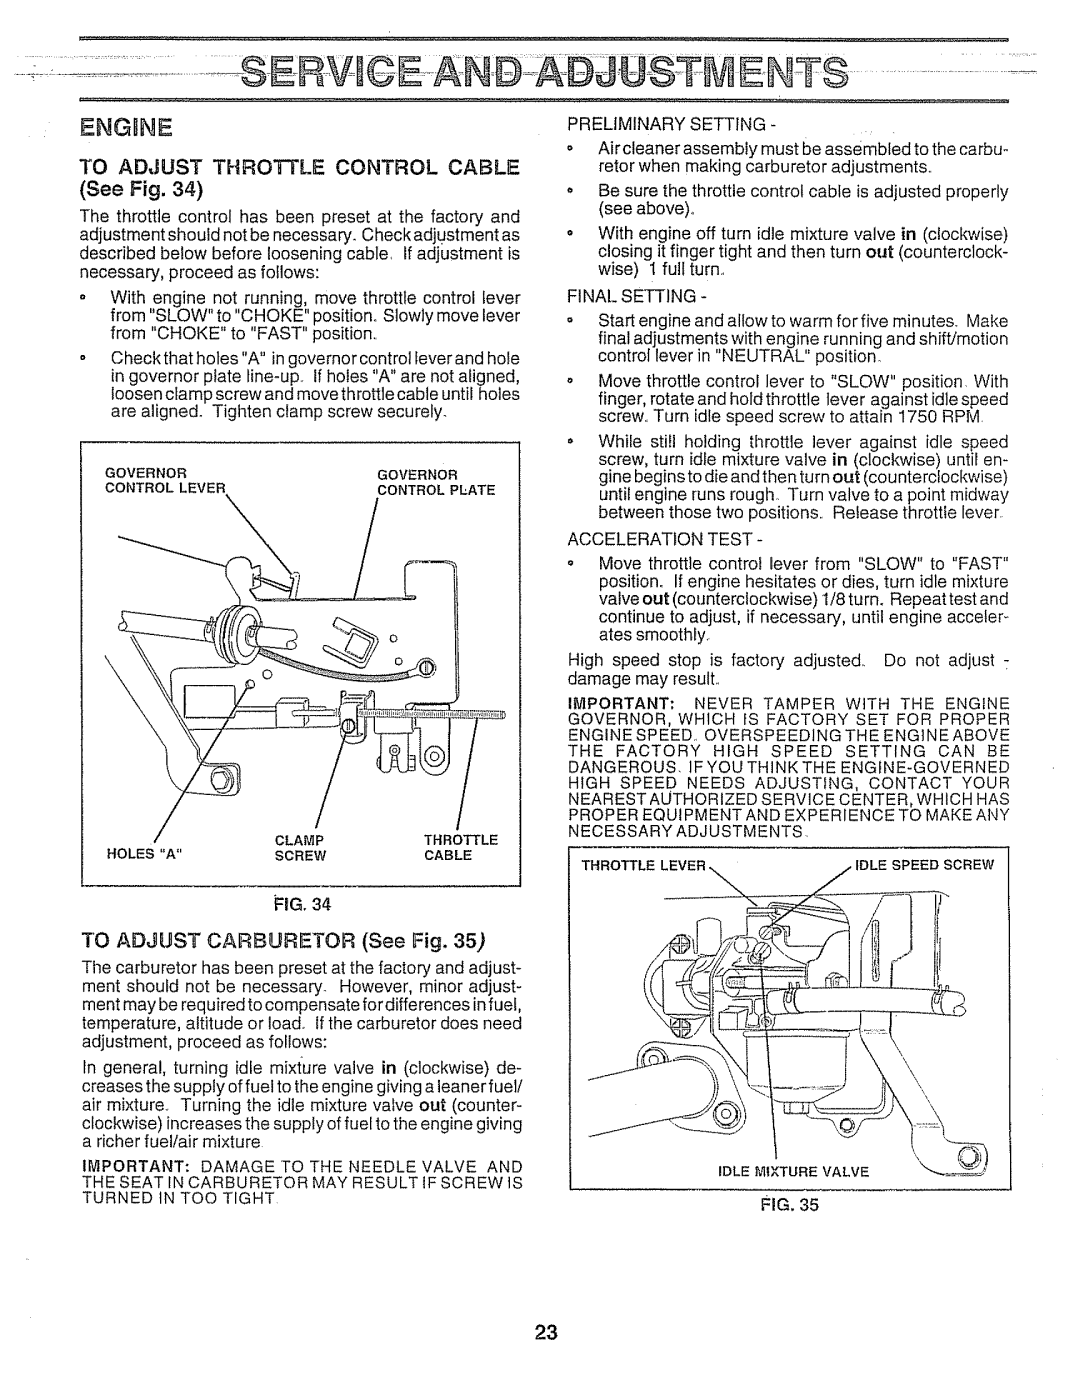 Craftsman 917.25693 owner manual Engbne, TO ADJUST THROTTLE CONTROL CABLE See Fig, TO ADJUST CARBURETOR See Fig 